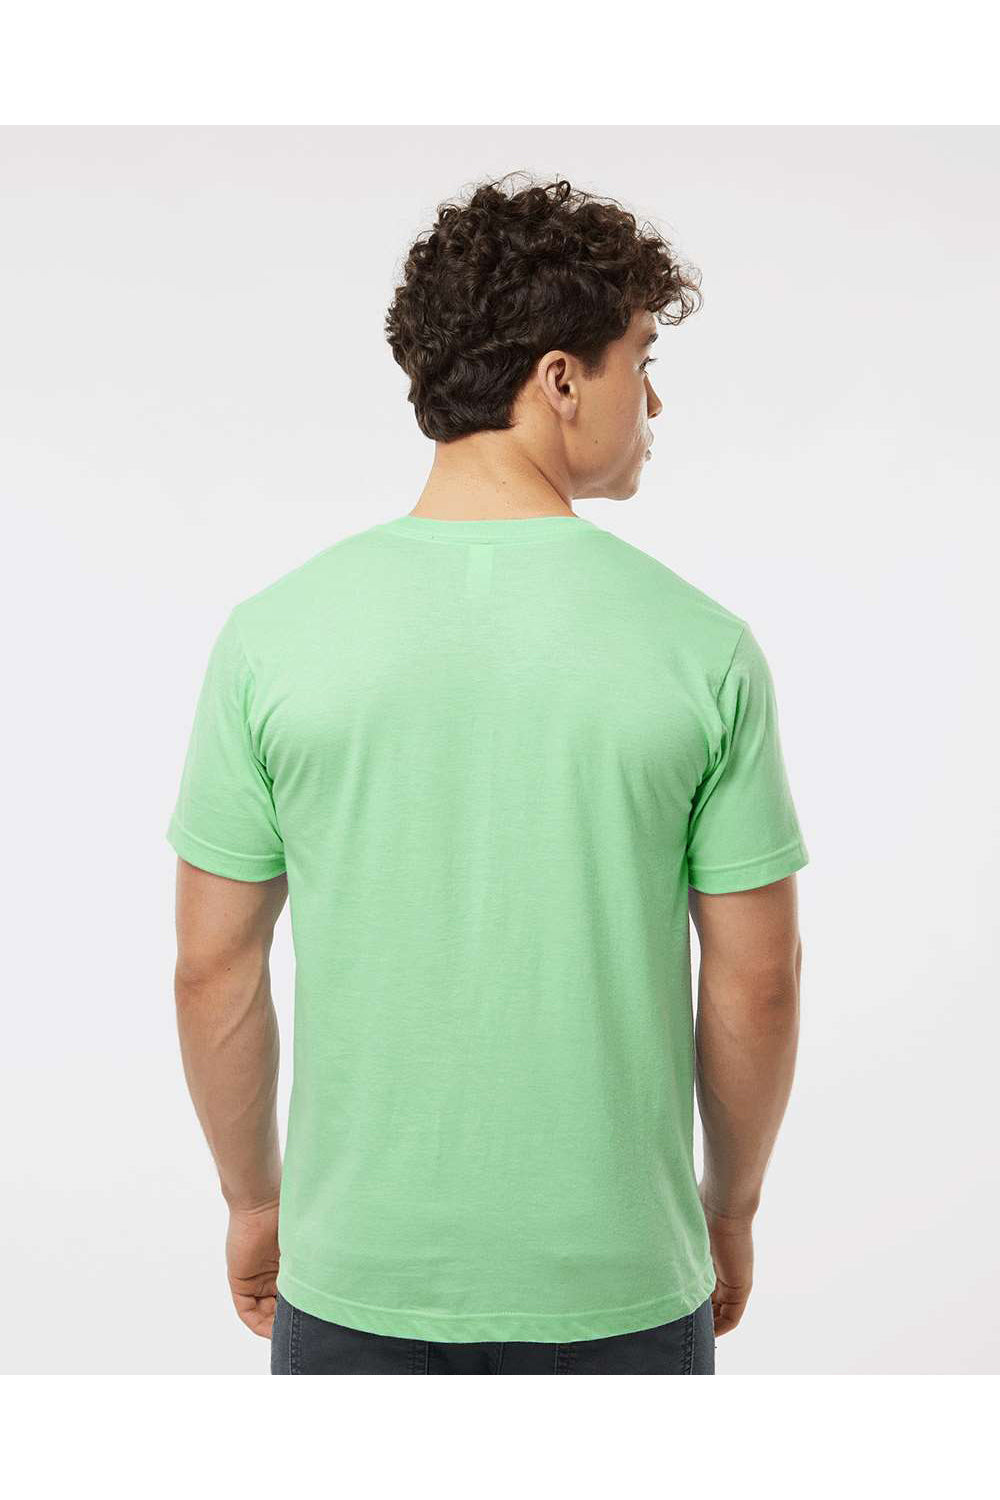 Tultex 202 Mens Fine Jersey Short Sleeve Crewneck T-Shirt Heather Neo Mint Green Model Back